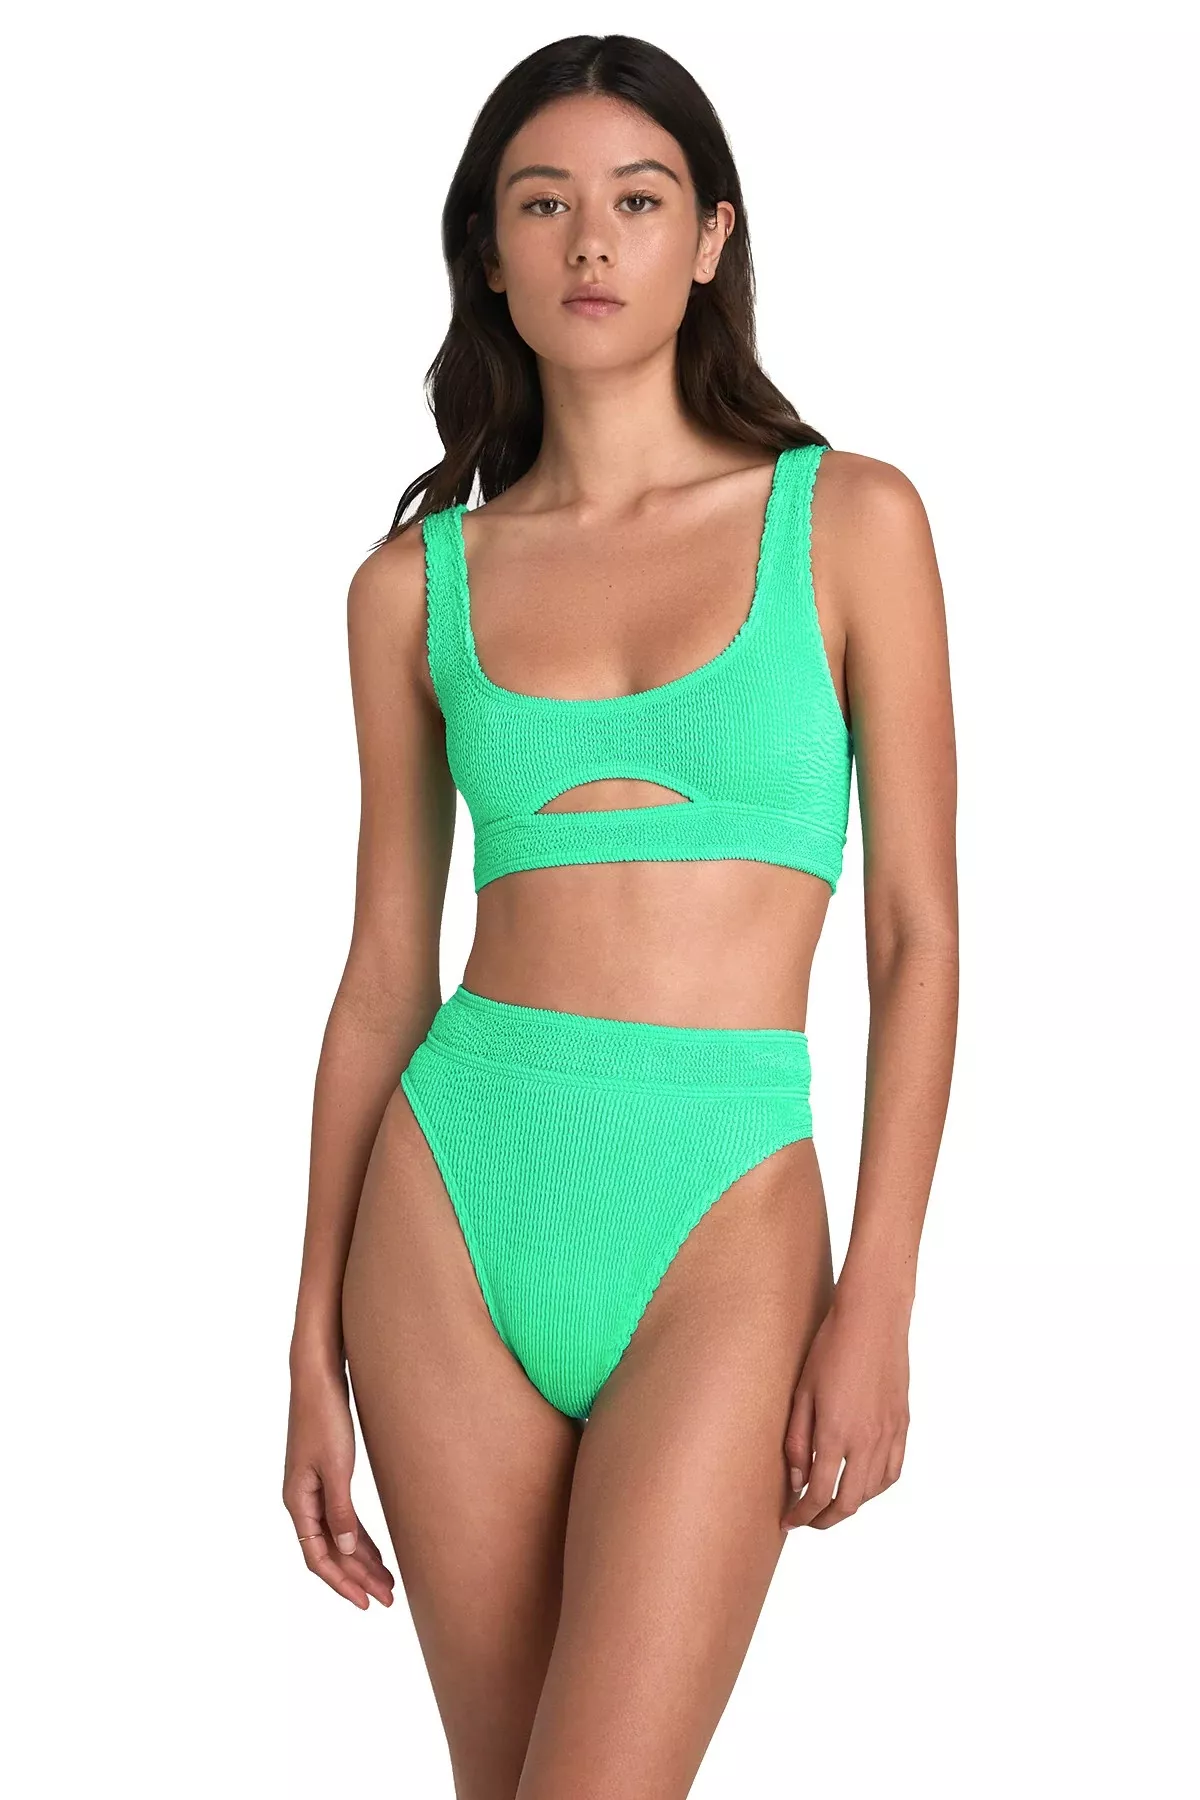 Pool-side w/ @savannahshaerichards 👙 Shop the 'St Lucia' Bikini